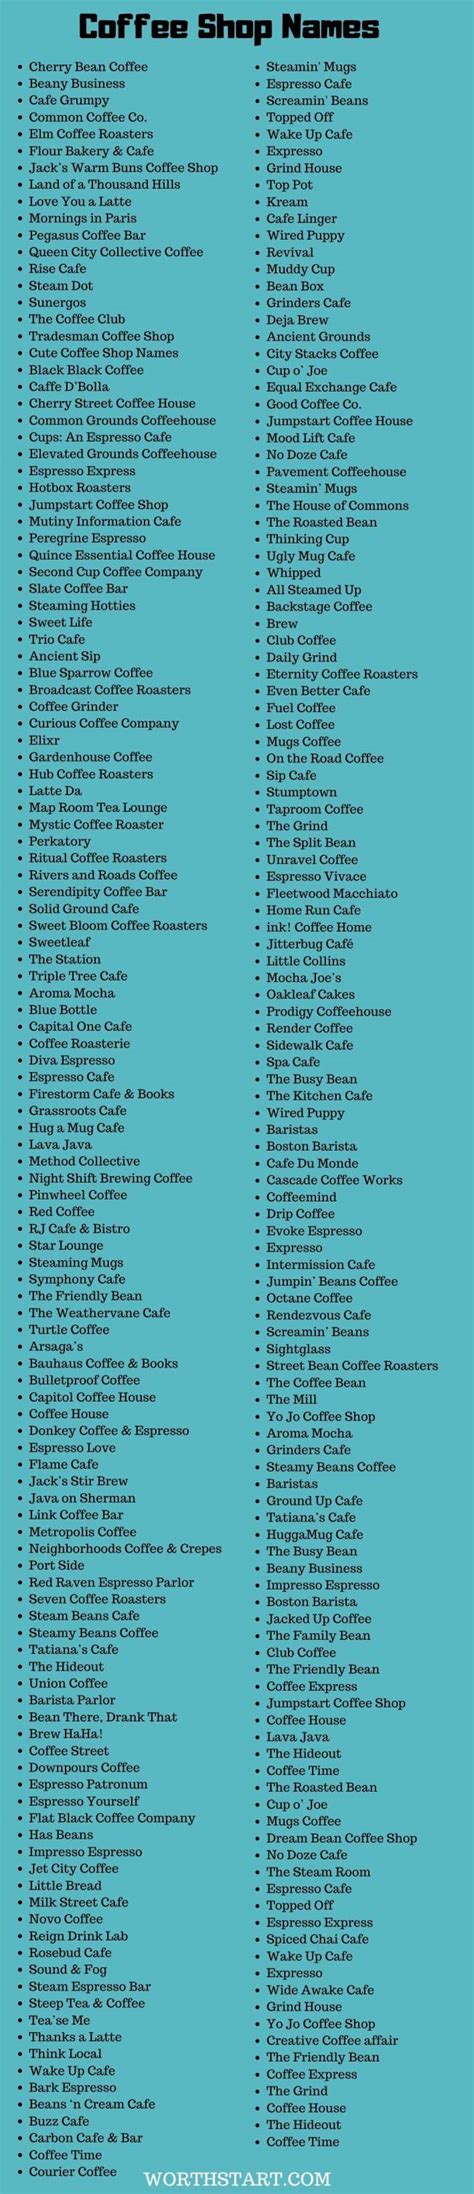 Coffee Shop Names 400 Inspiring Cafe Names